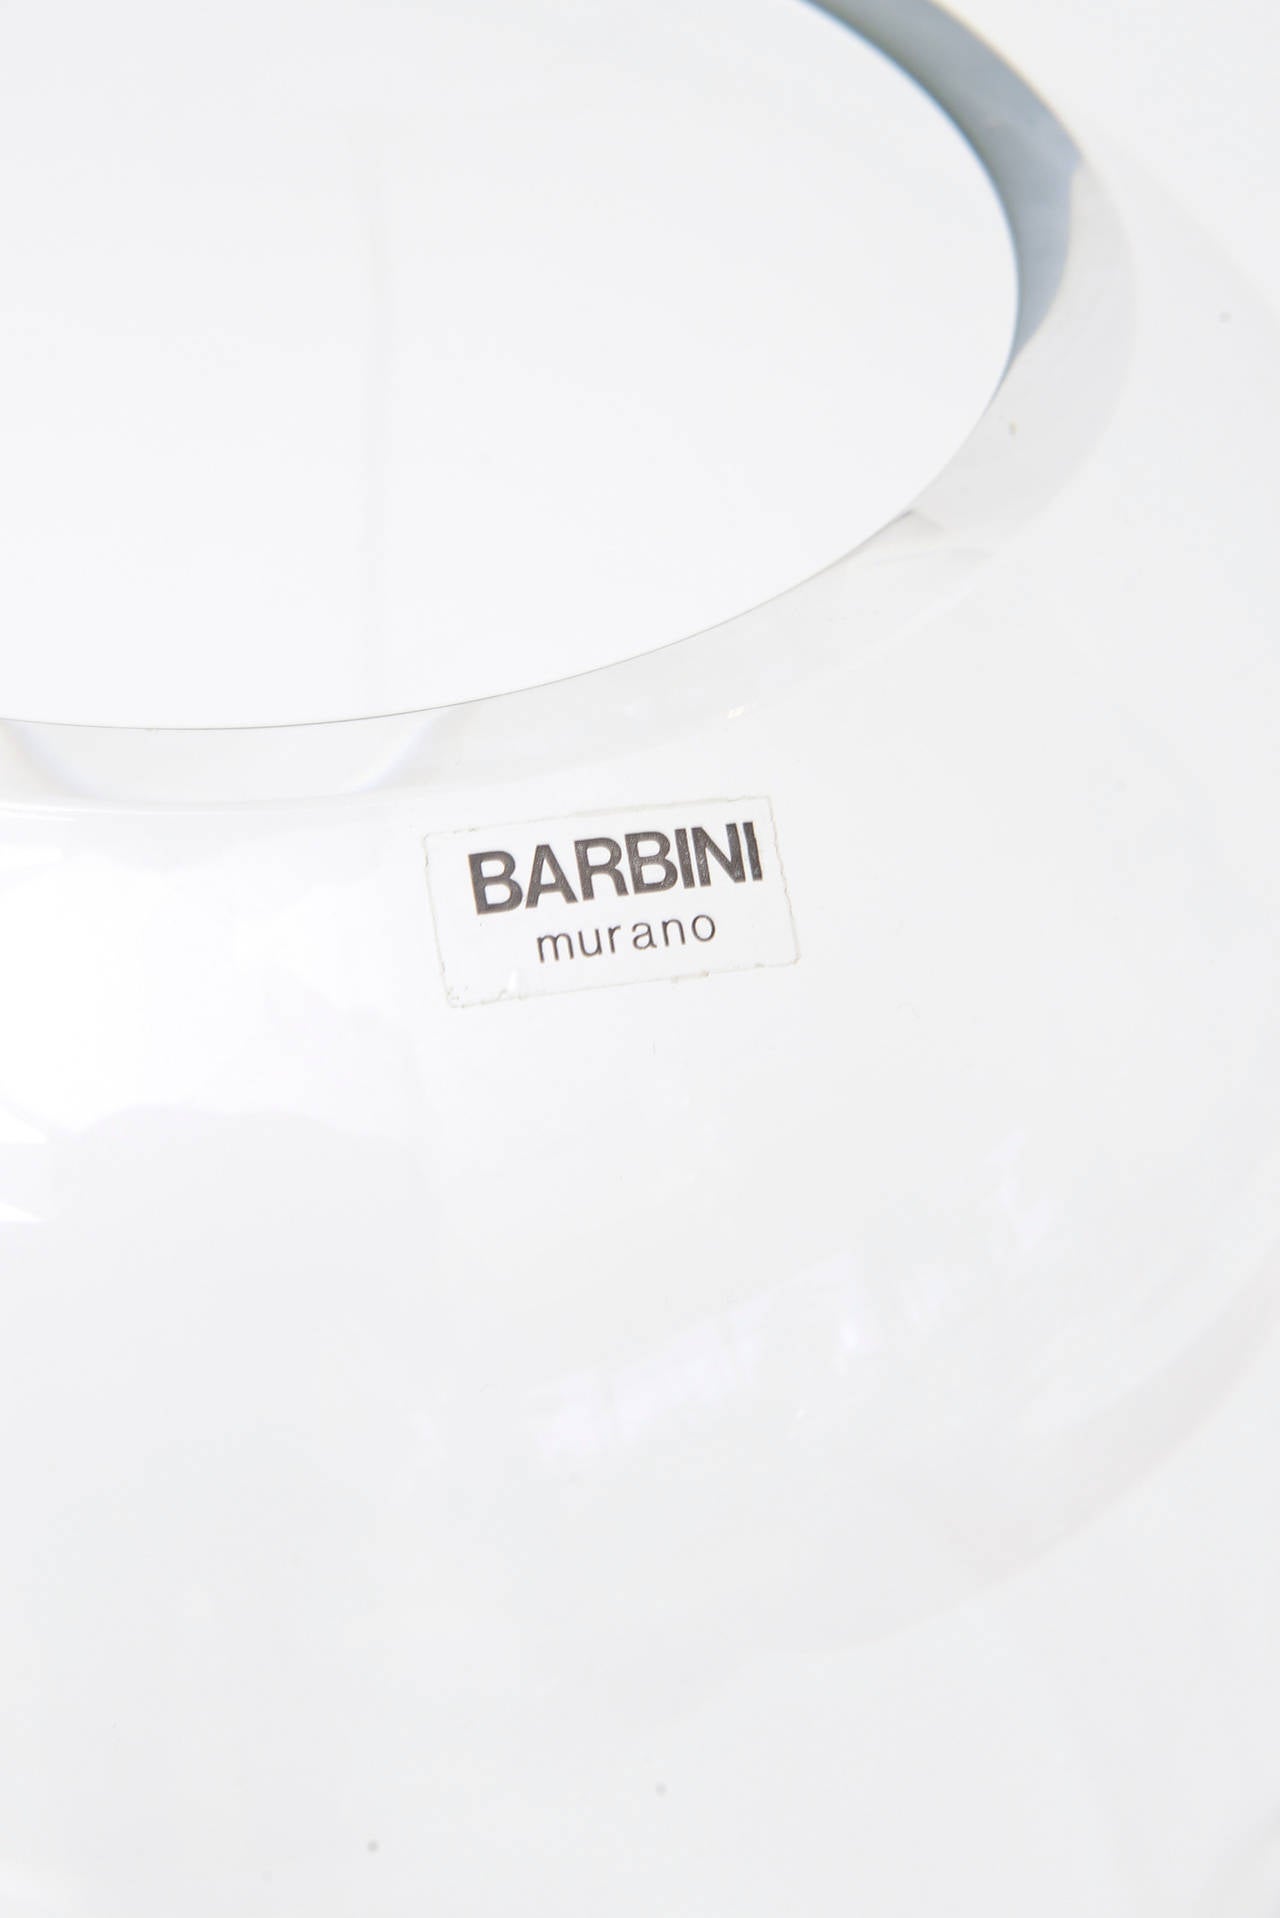 Modern Italian Murano Barbini Monumental Glass Vase with Black Glass Stripe 